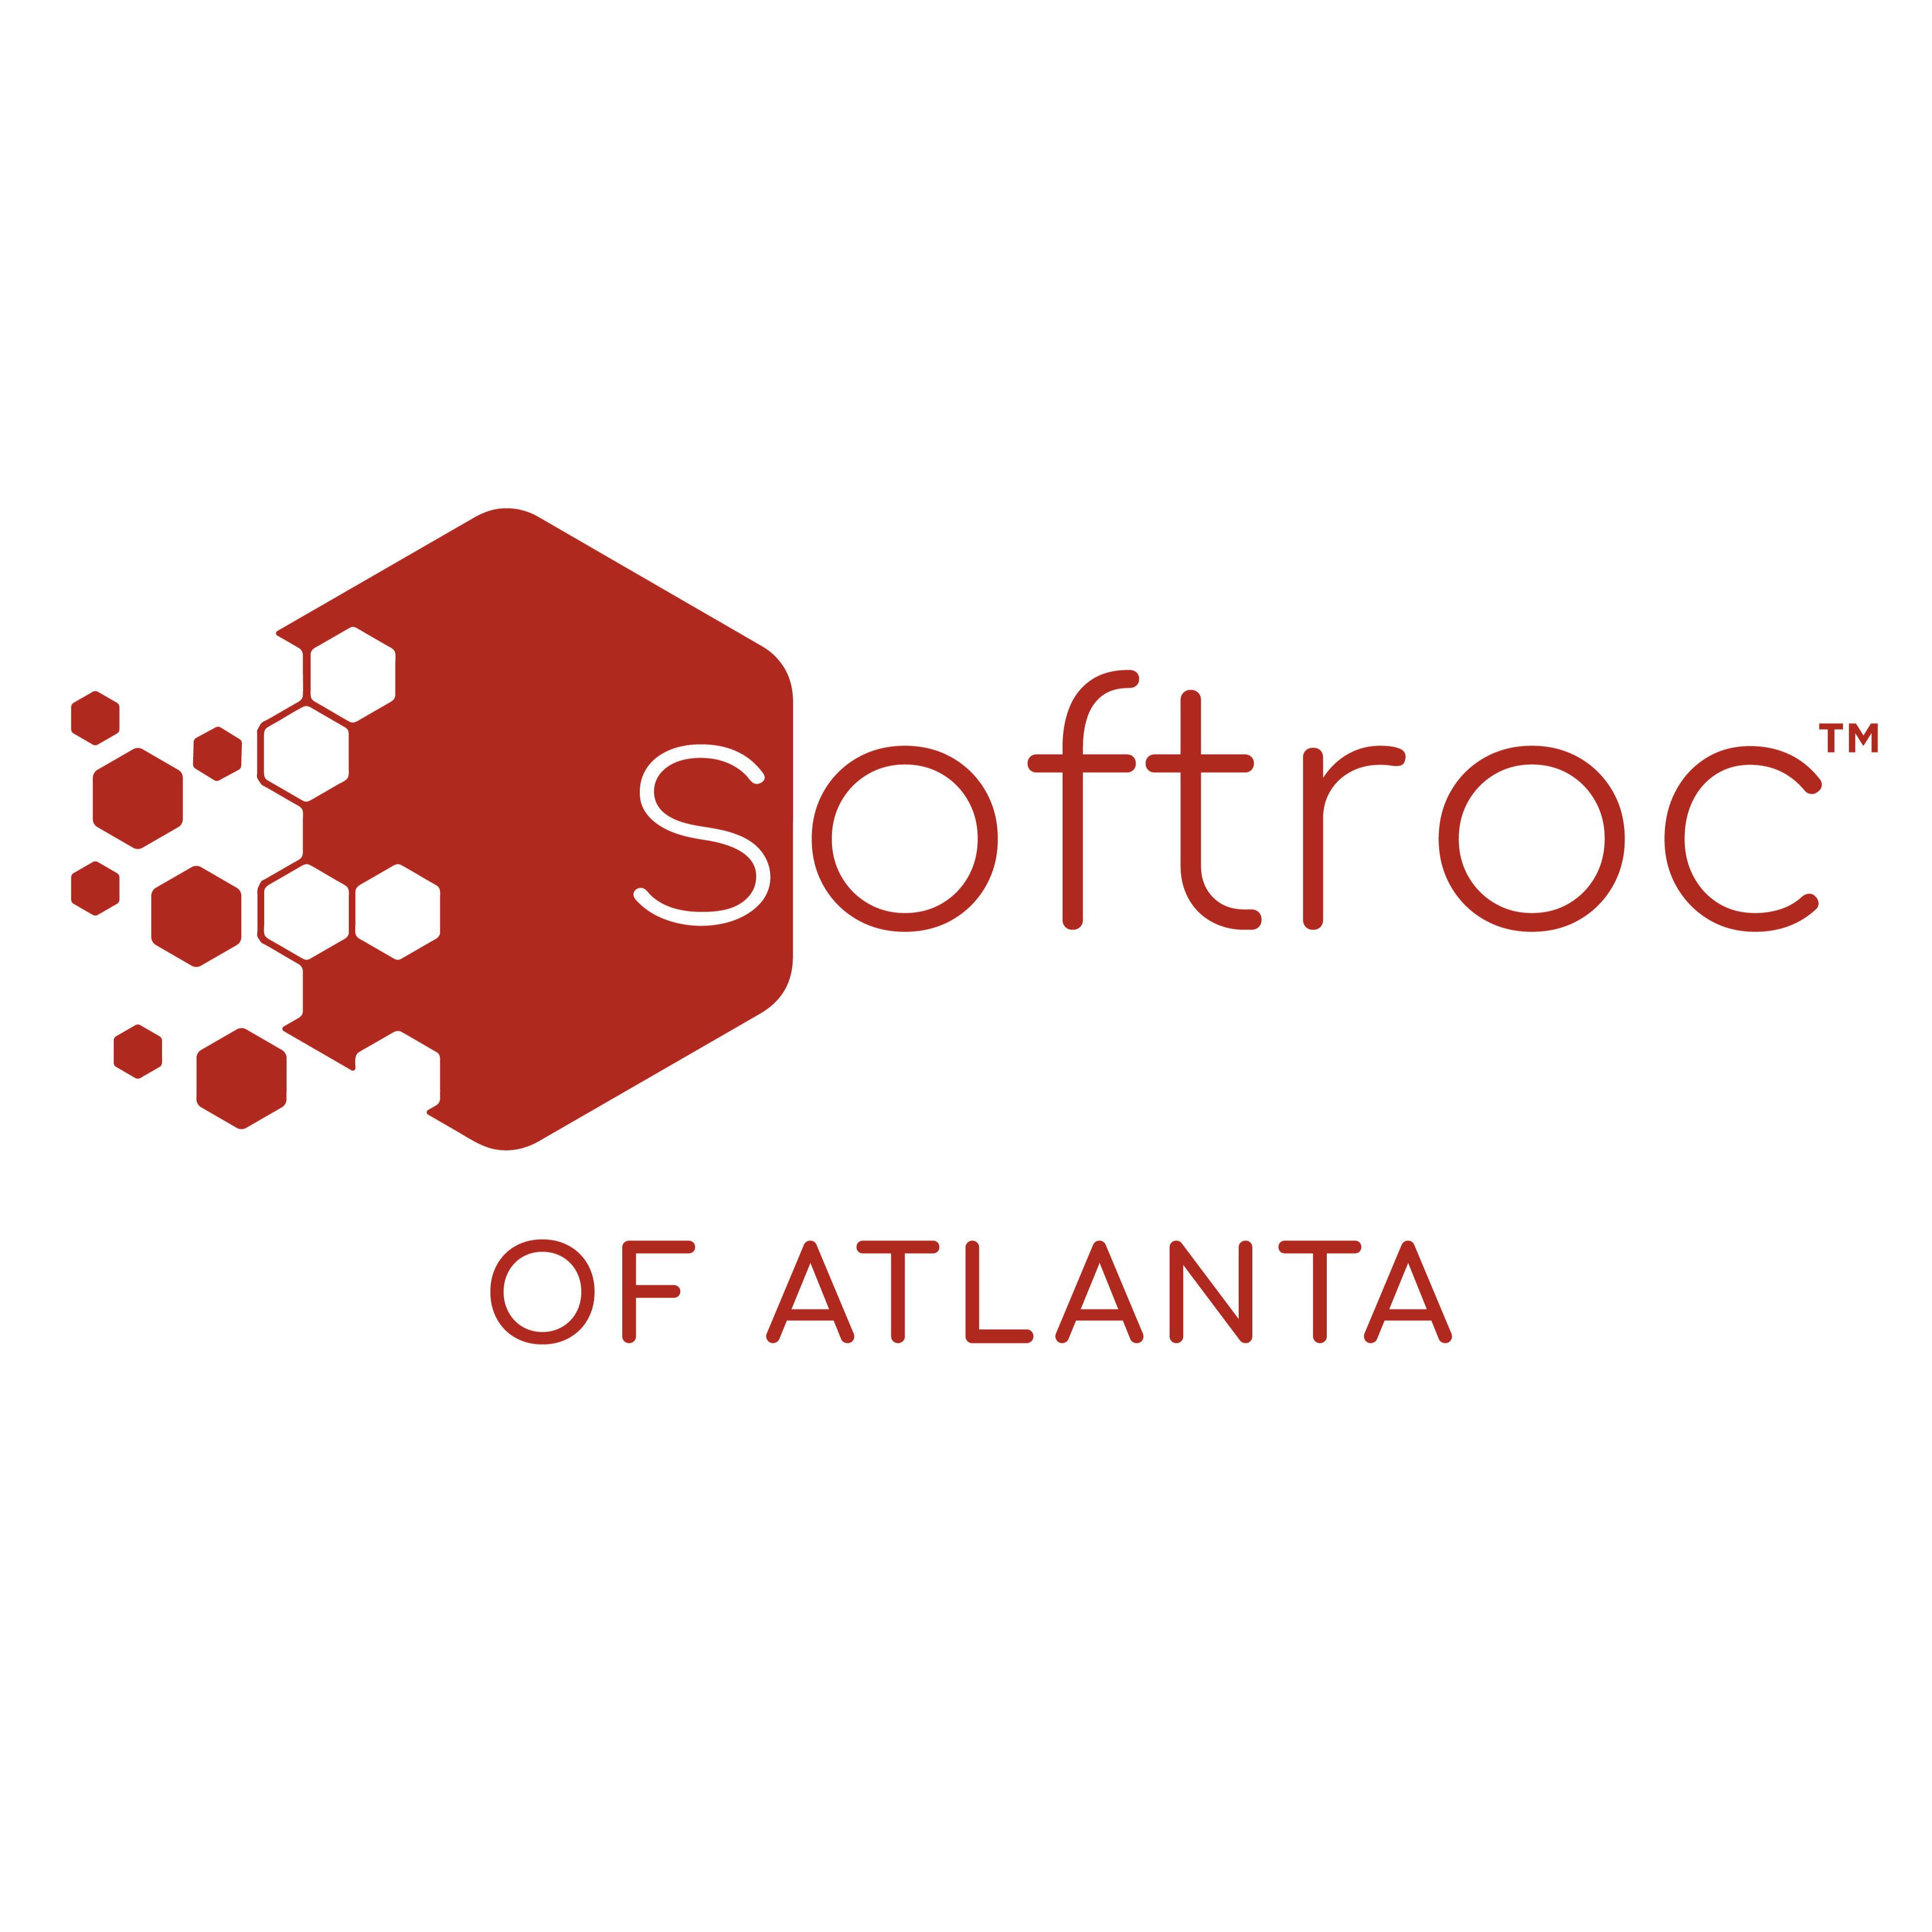 Softroc of Atlanta